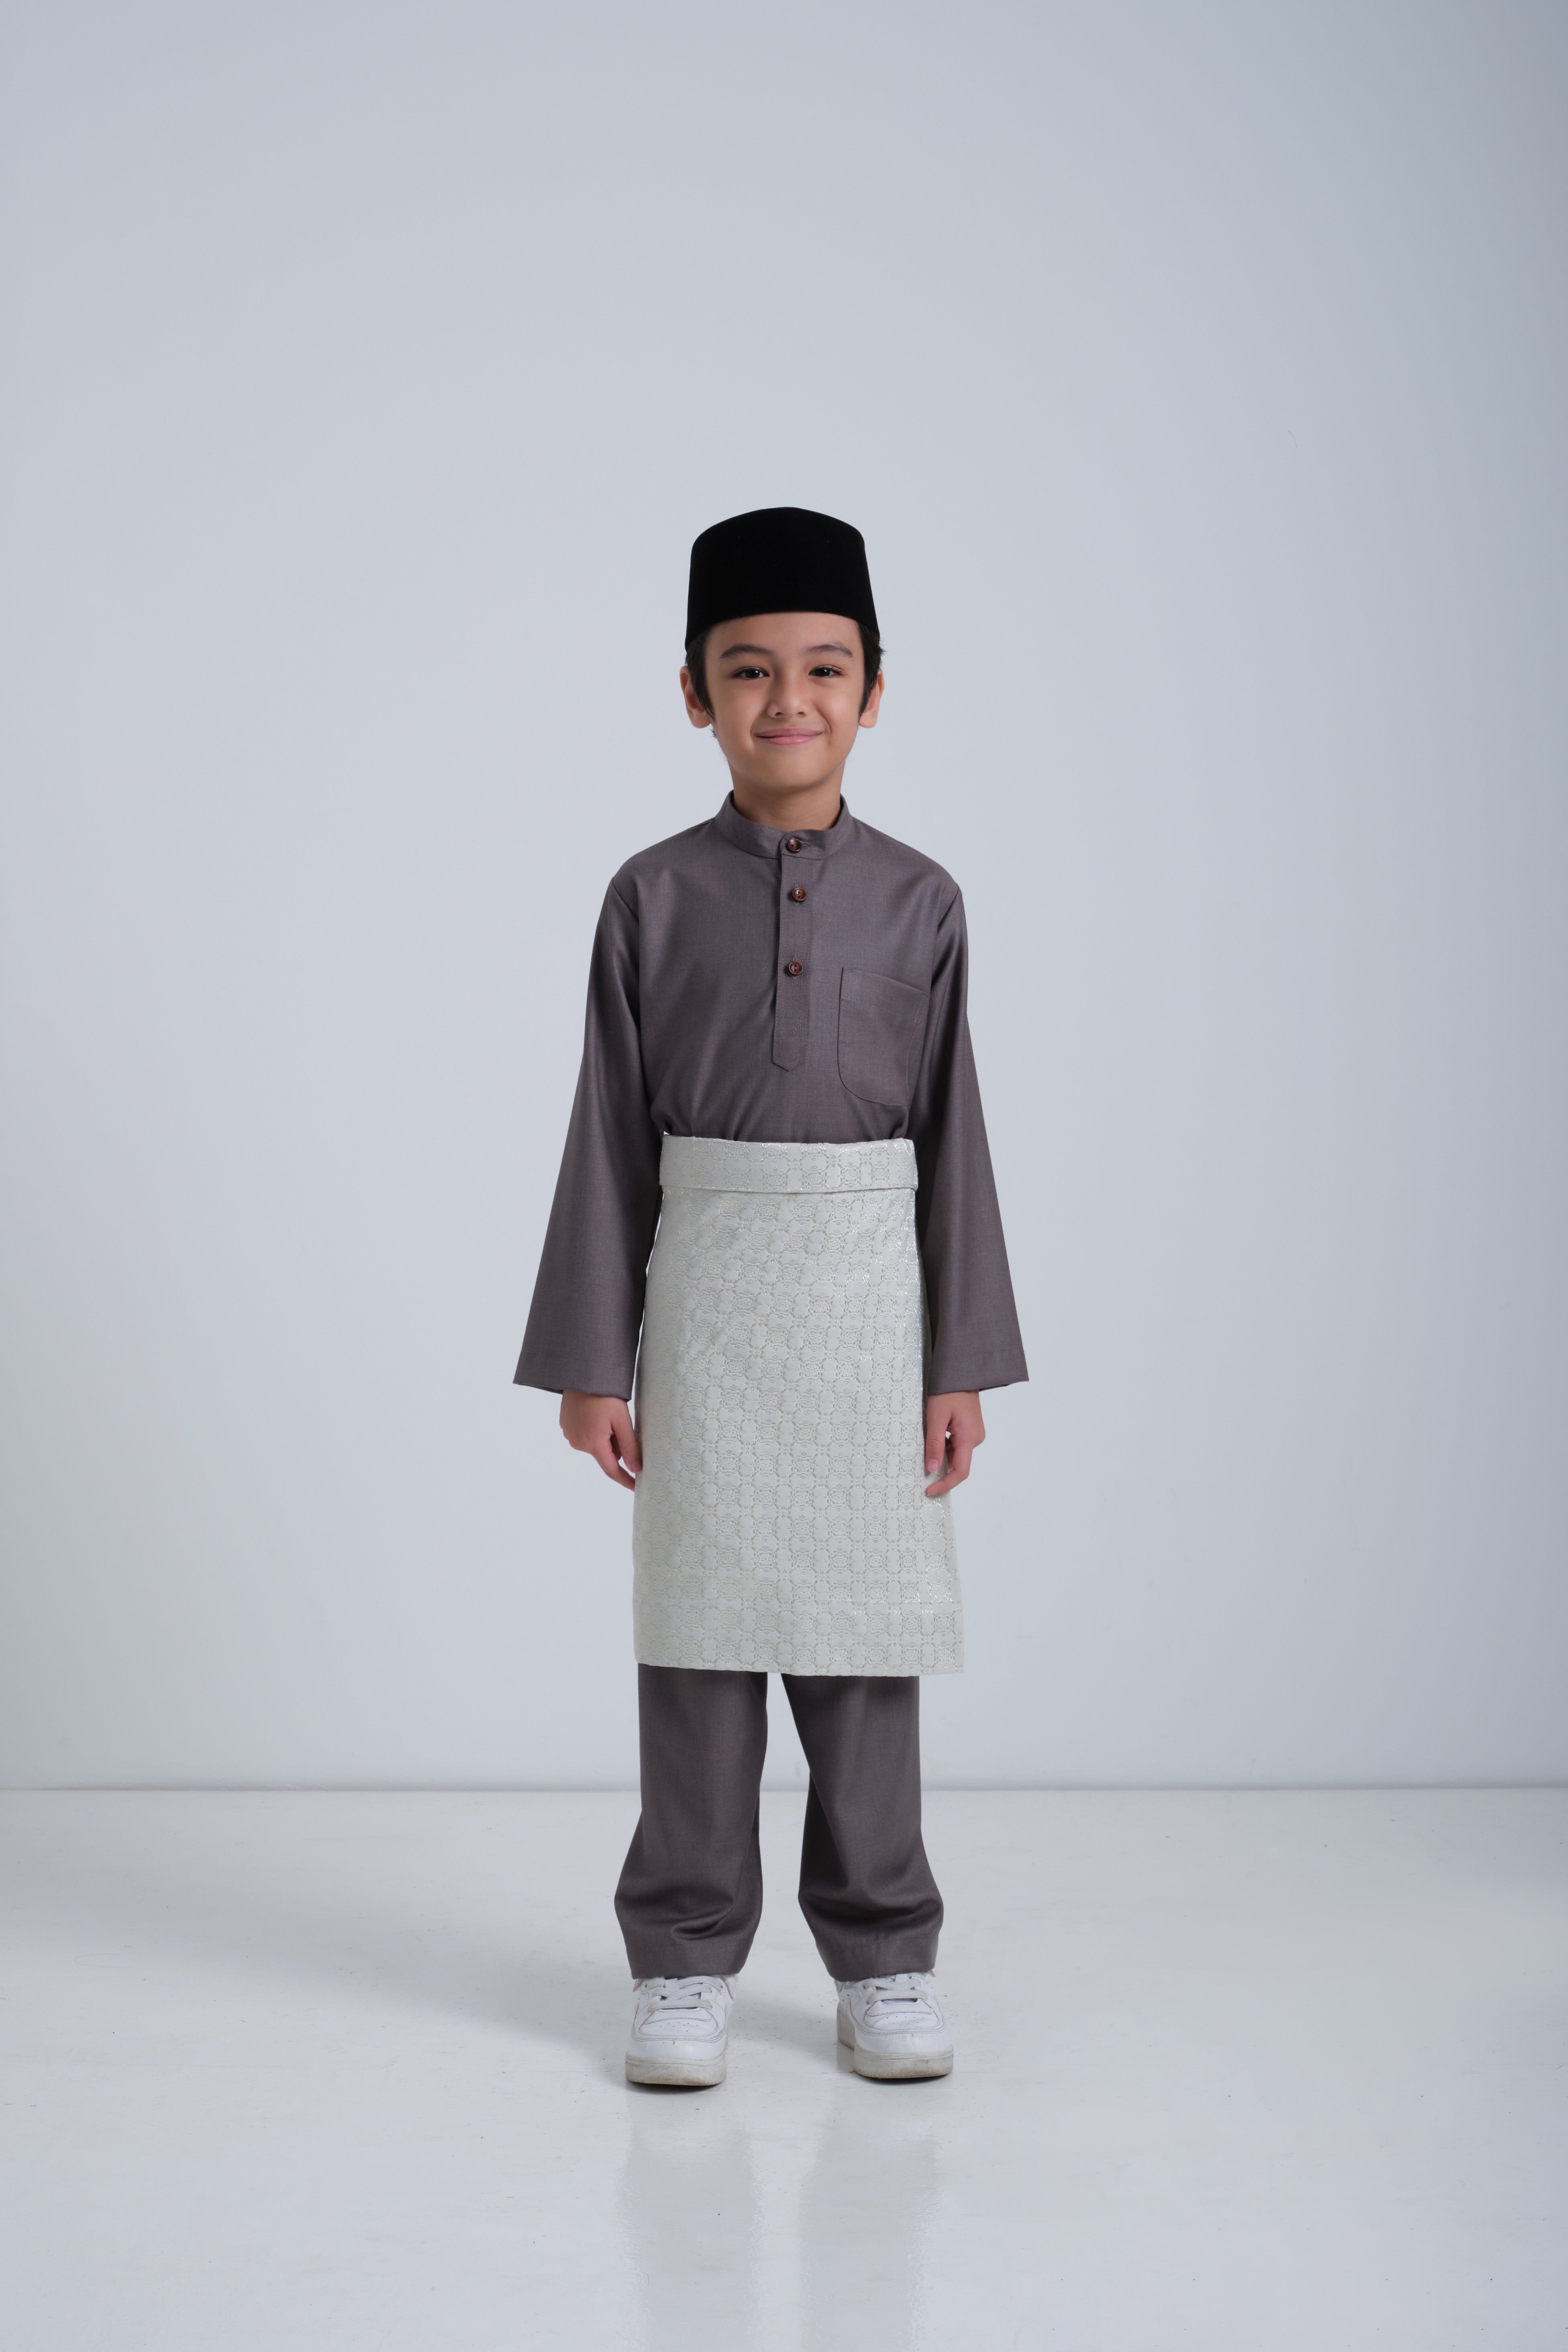 Patawali Boys Baju Melayu Cekak Musang - Dim Grey